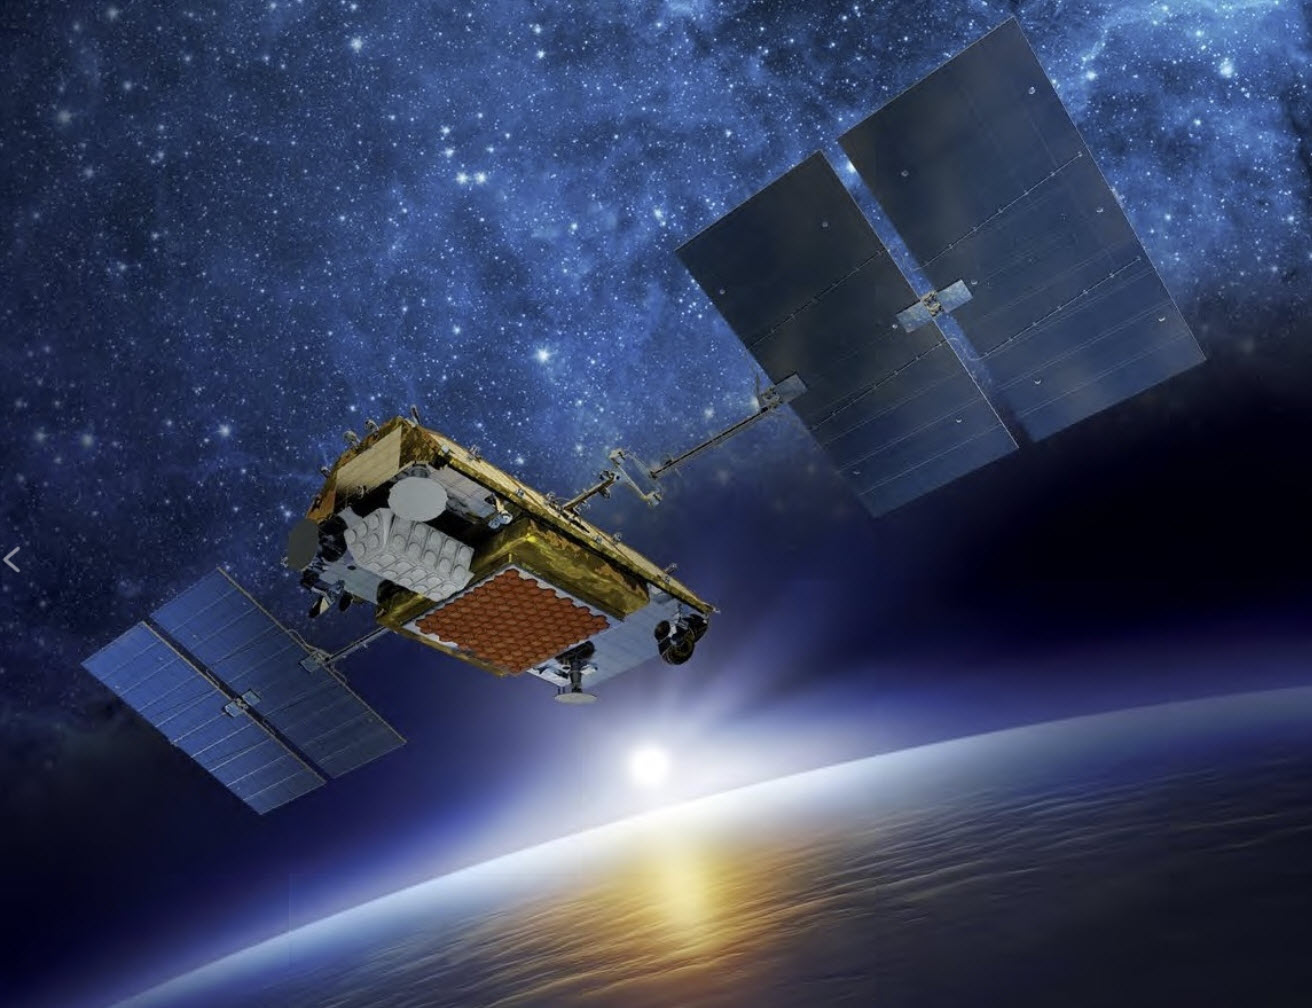 Iridium NEXT satellite, carrying the Aireon piggyback payload. Image: Iridium